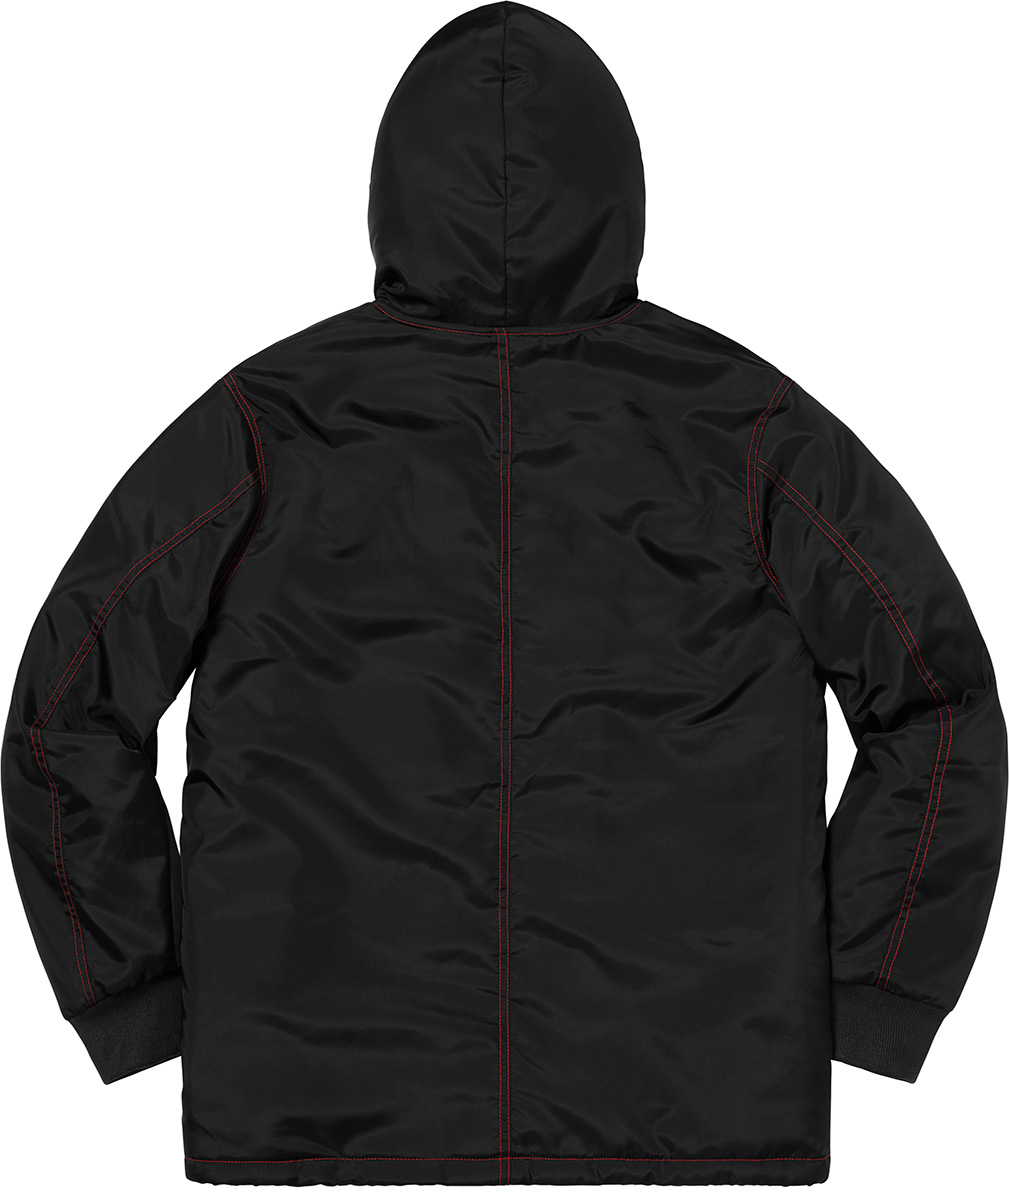 supreme-18aw-fall-winter-sherpa-lined-nylon-zip-up-jacket